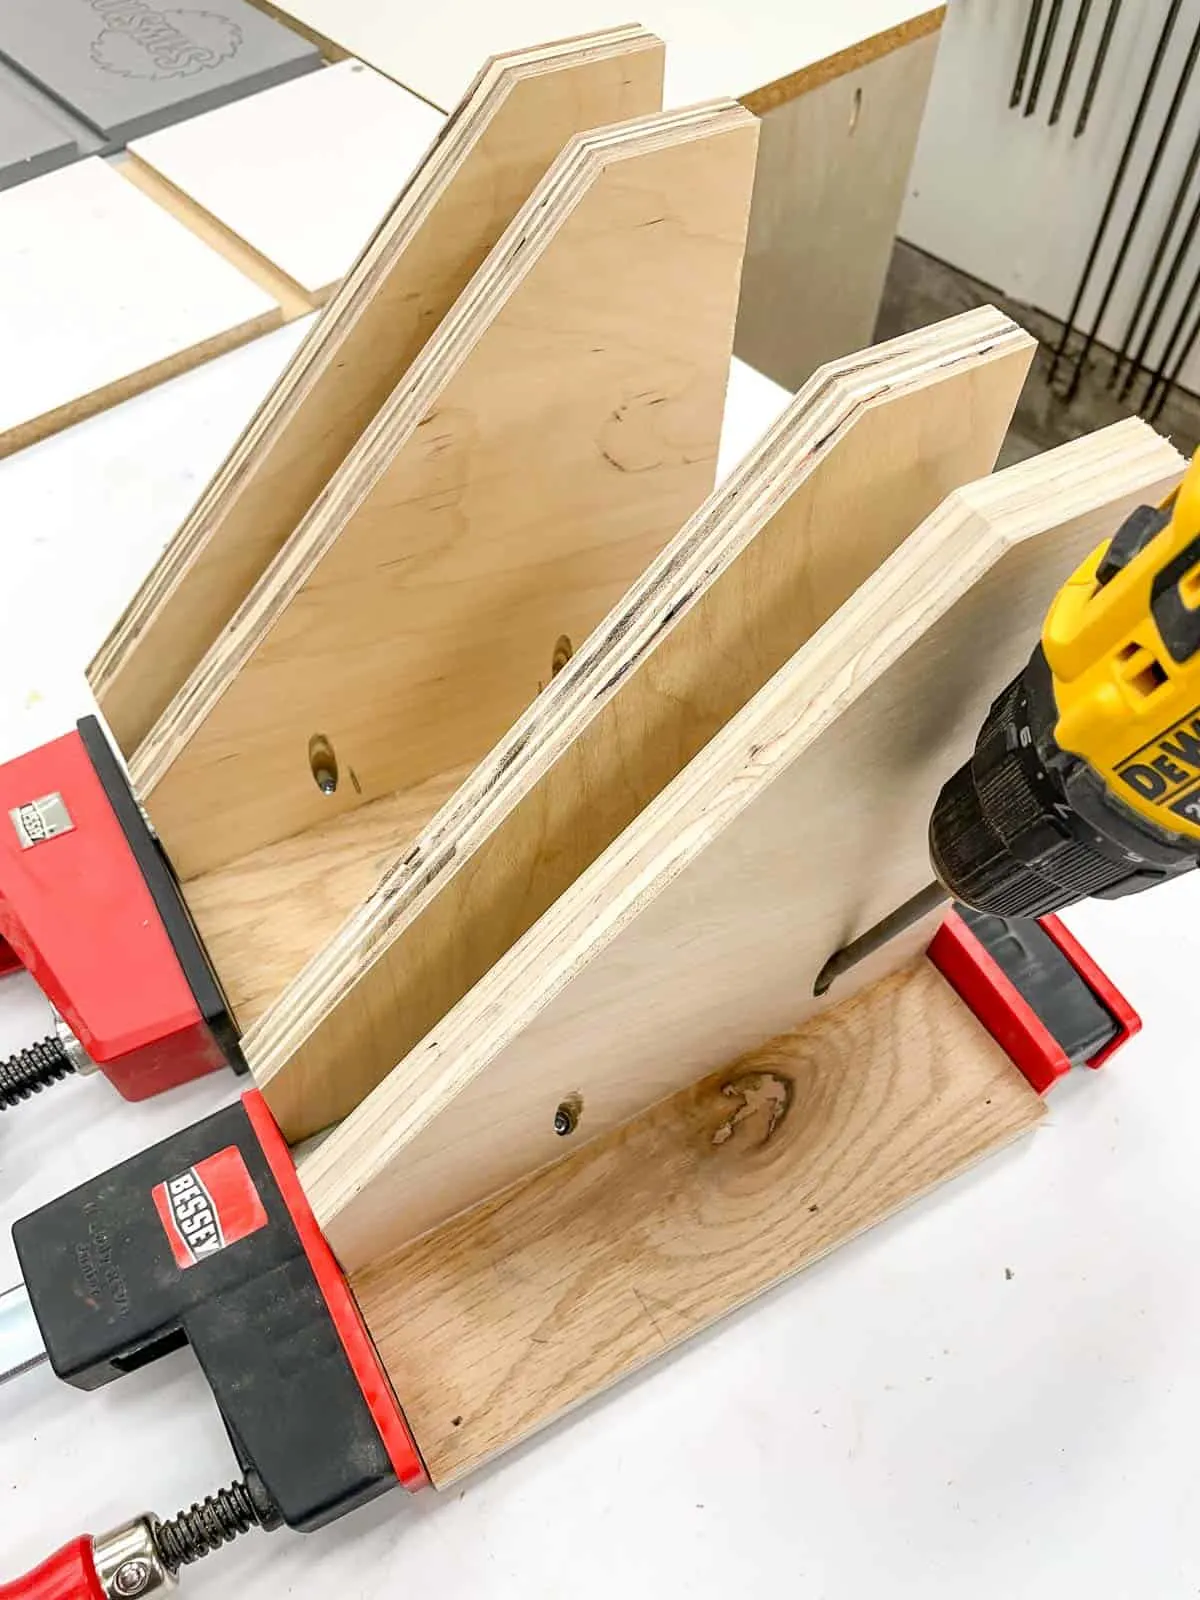 assembling DIY clamp rack with pocket hole screws